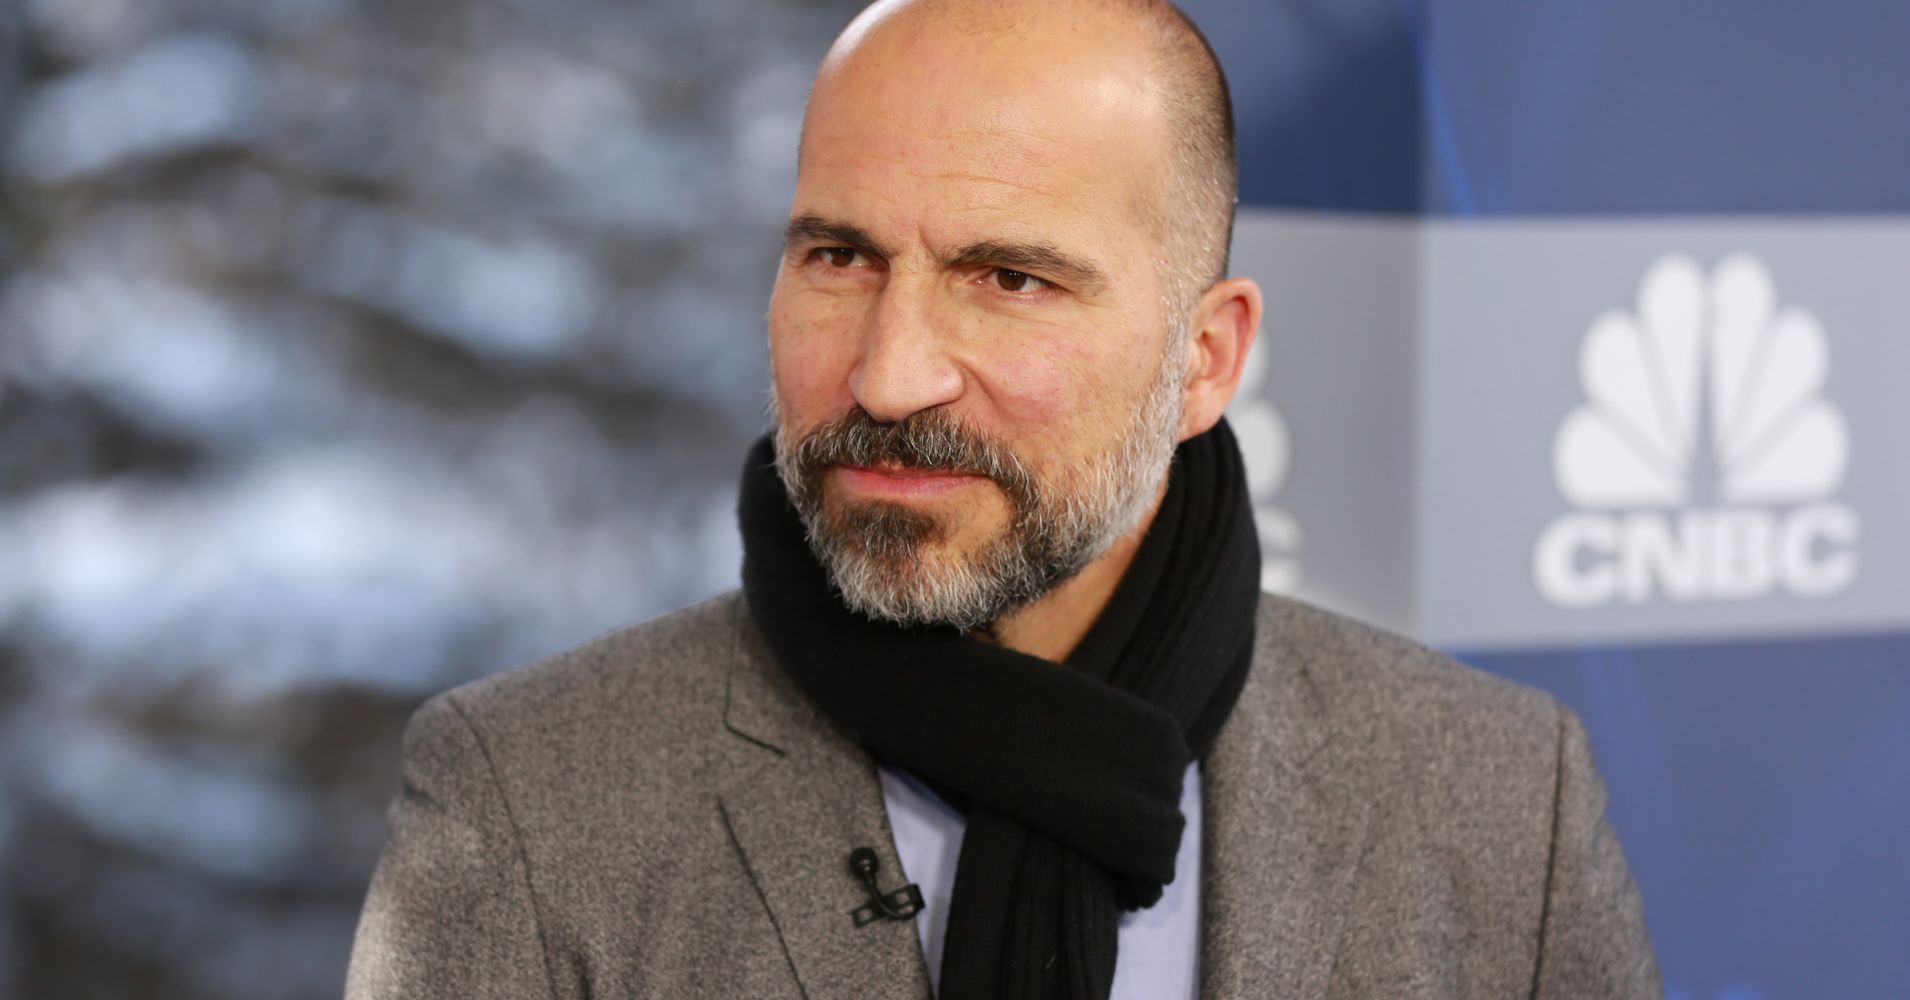 Dara Khosrowshahi, CEO of Uber, speaking at the 2019 WEF in Davos, Switzerland on Jan. 23rd, 2019.